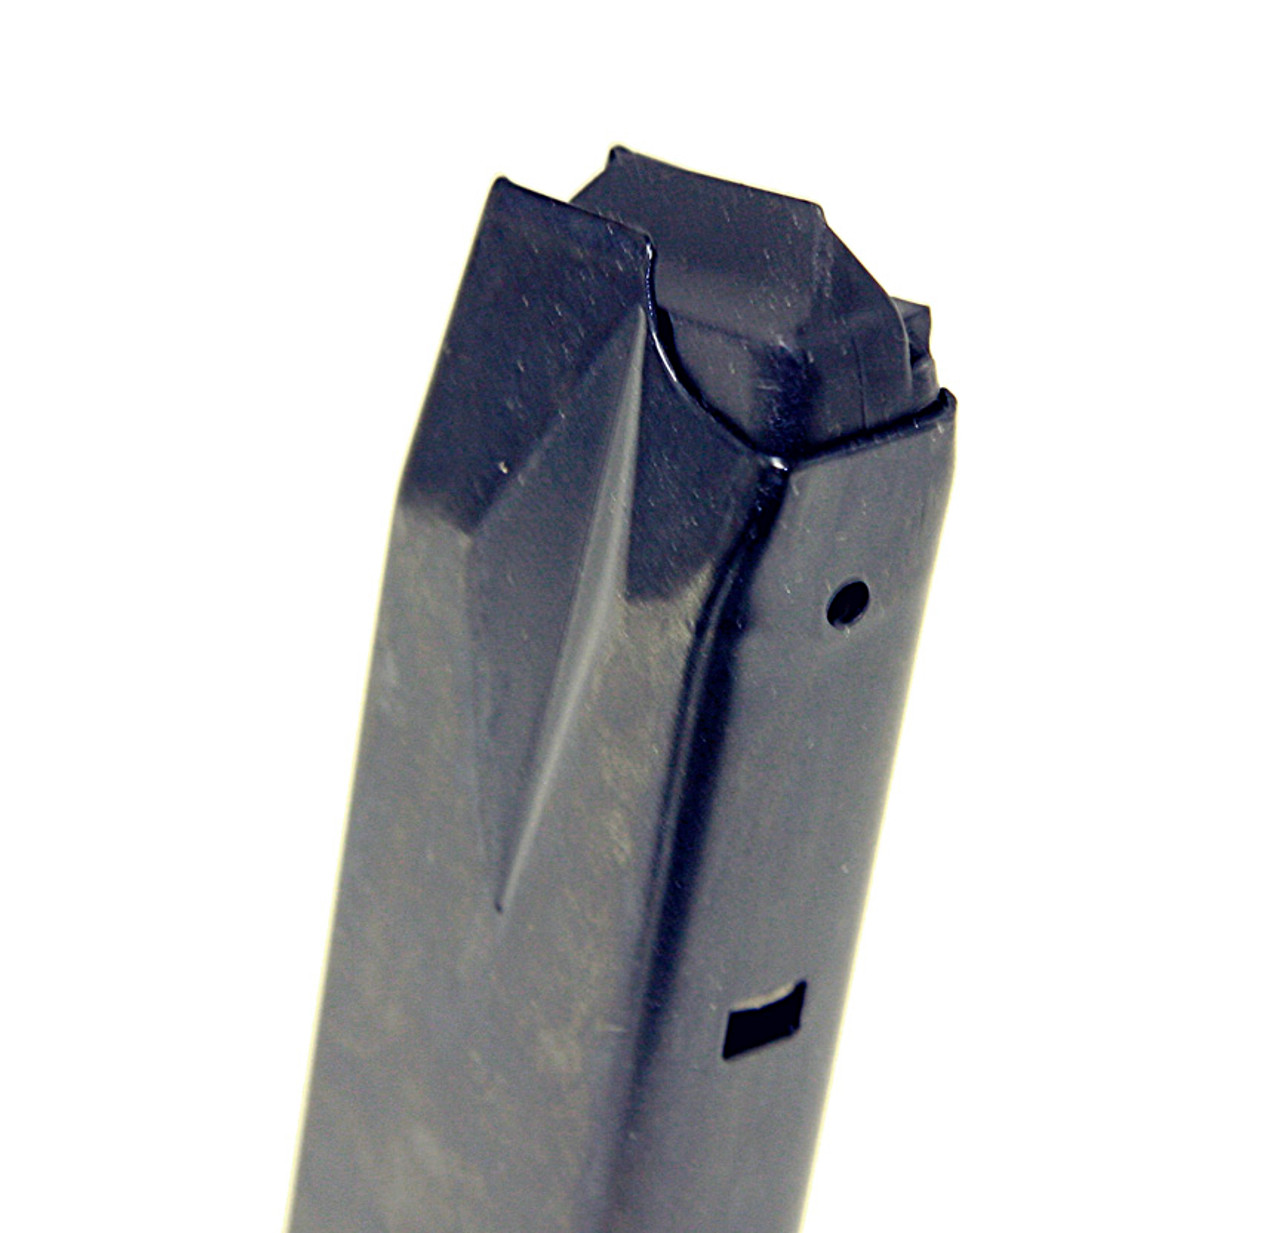 Ruger® P-Series 9mm (20) Rd - Blue Steel